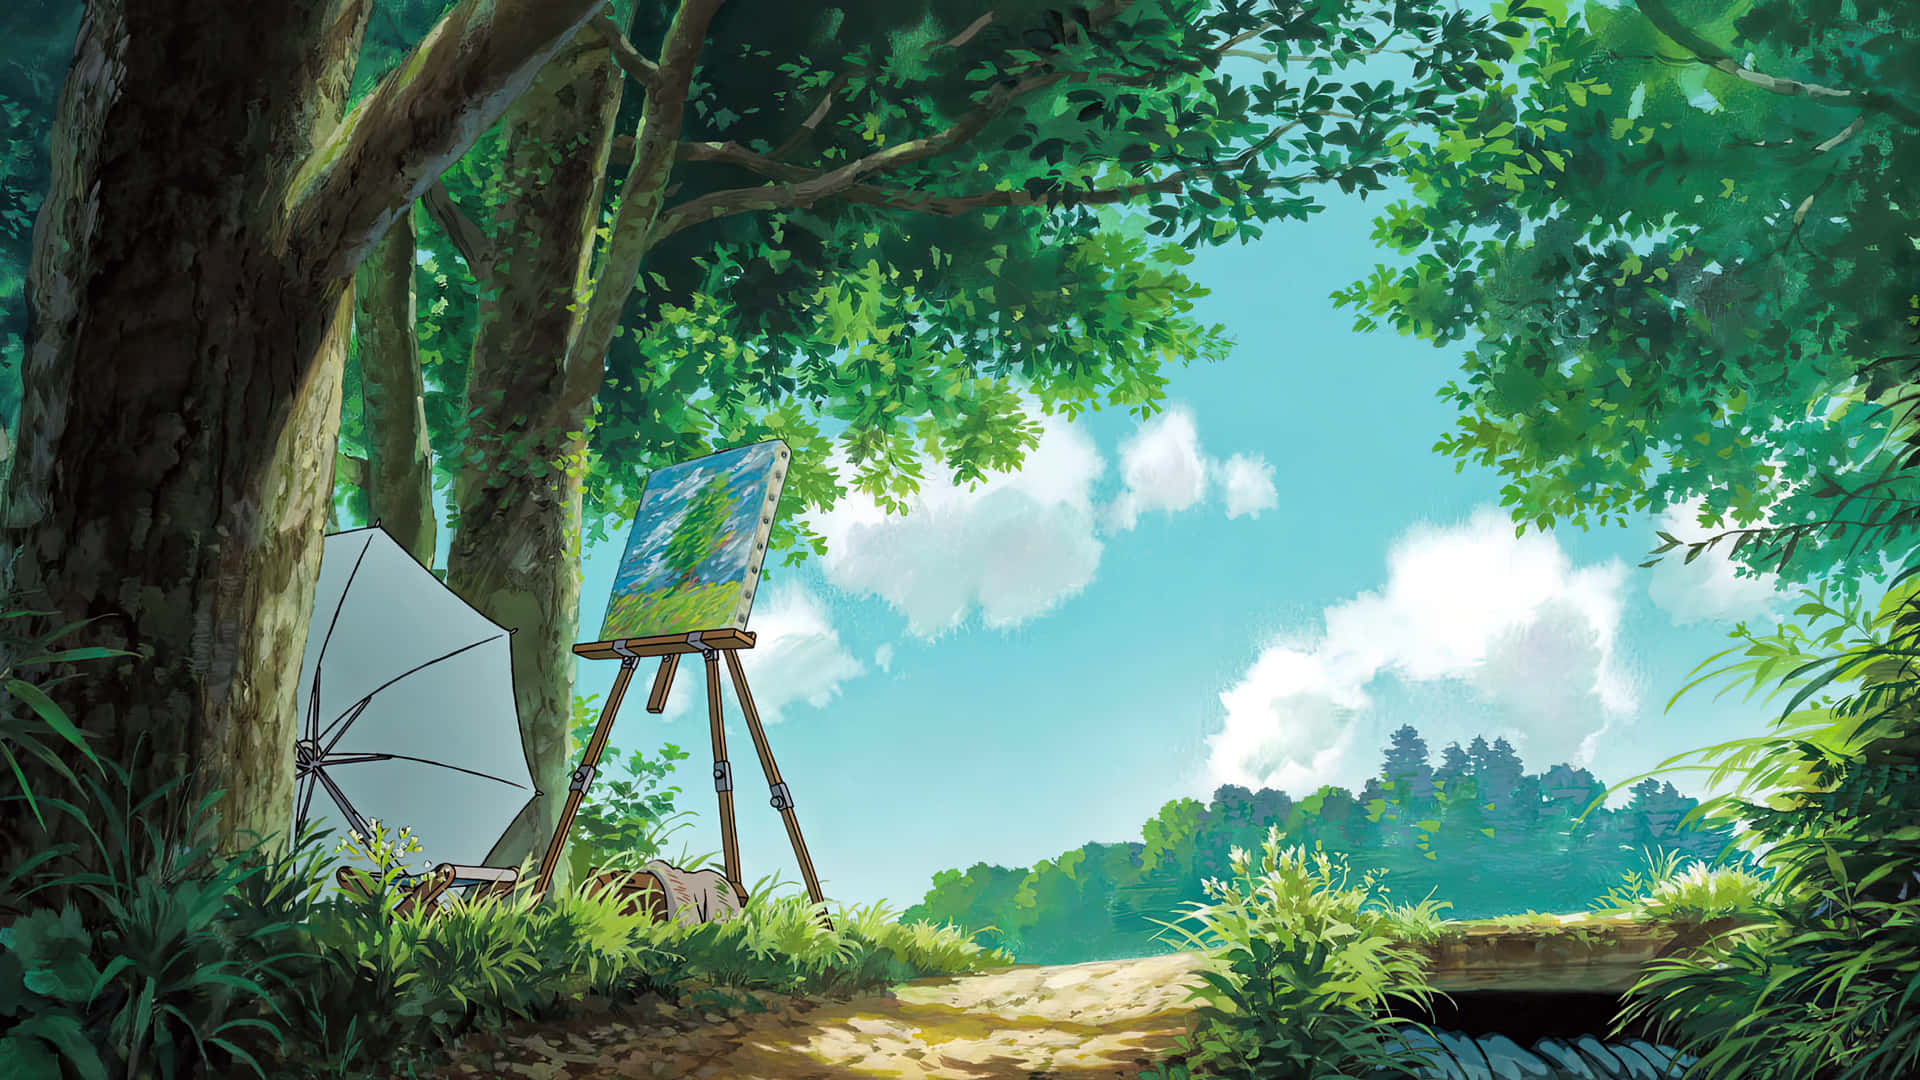 Iconic scenery in Studio Ghibli's The Wind Rises Wallpaper